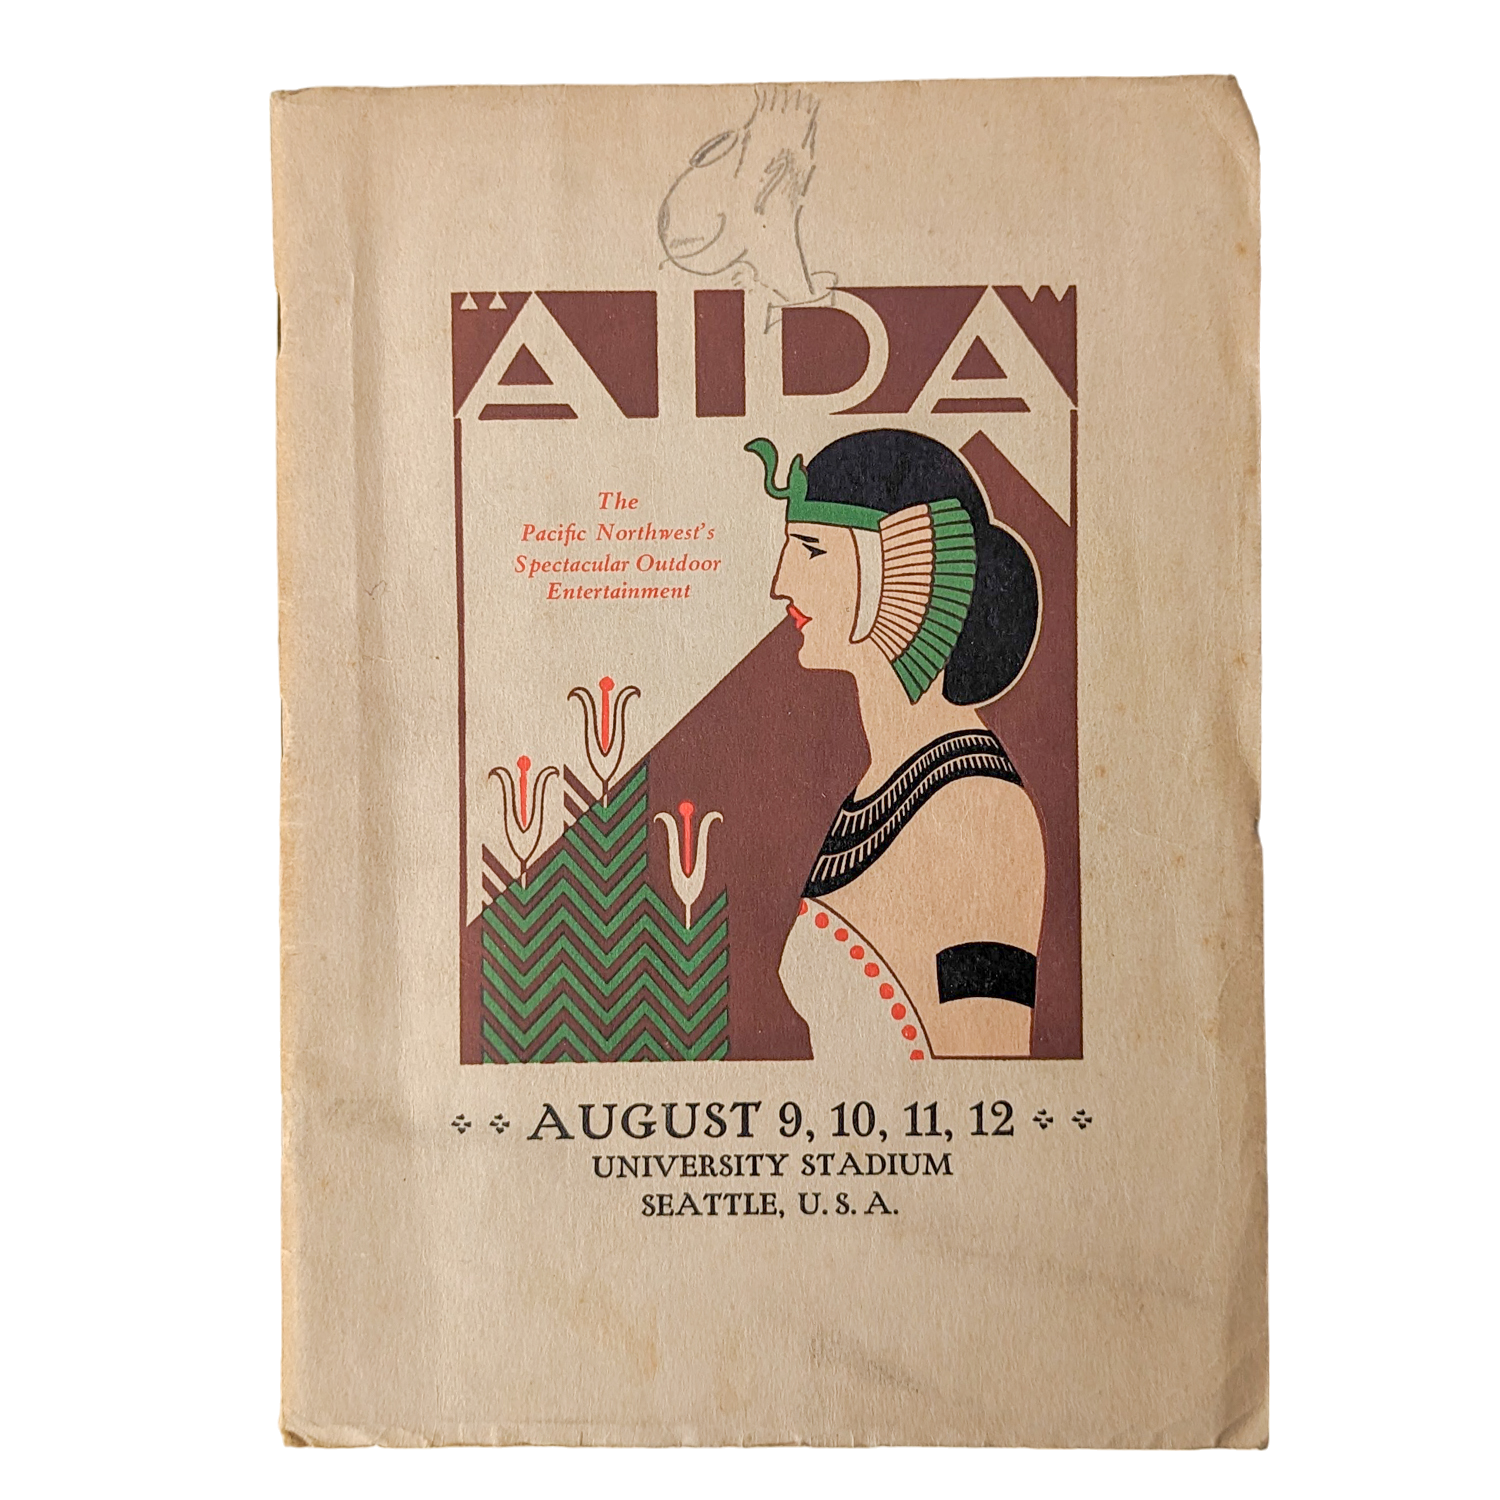 Rare Antique Aida Opera Program from Seattle